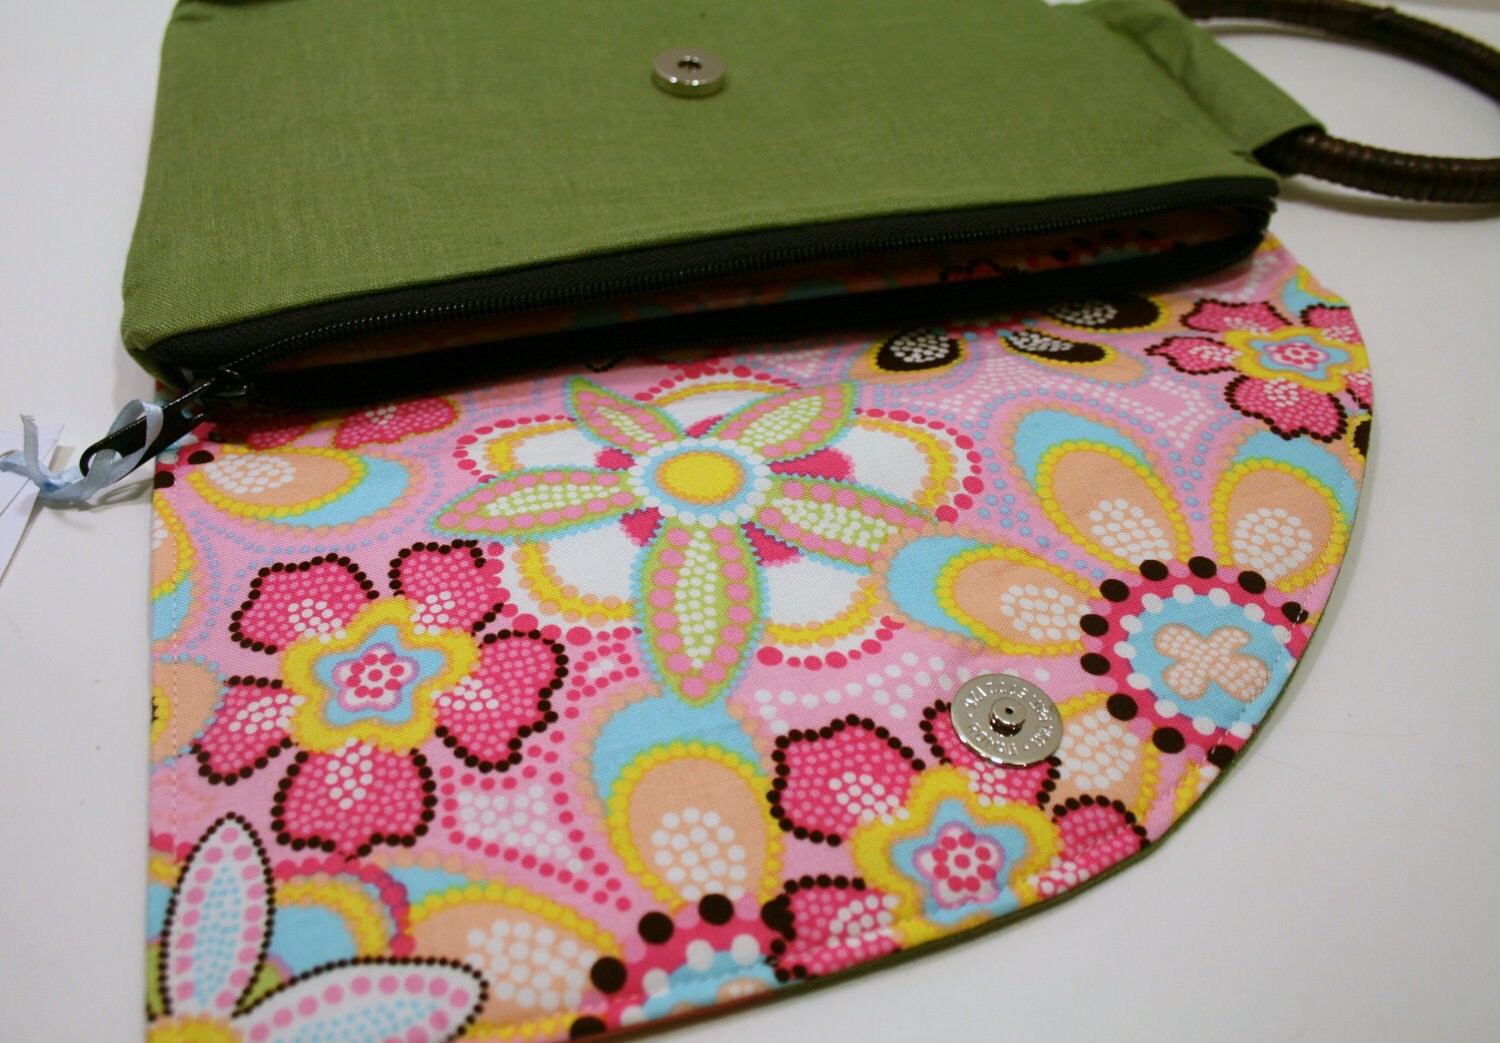 SALE Green Fabric Clutch Purse Wristlet Bag Colorful Clutch